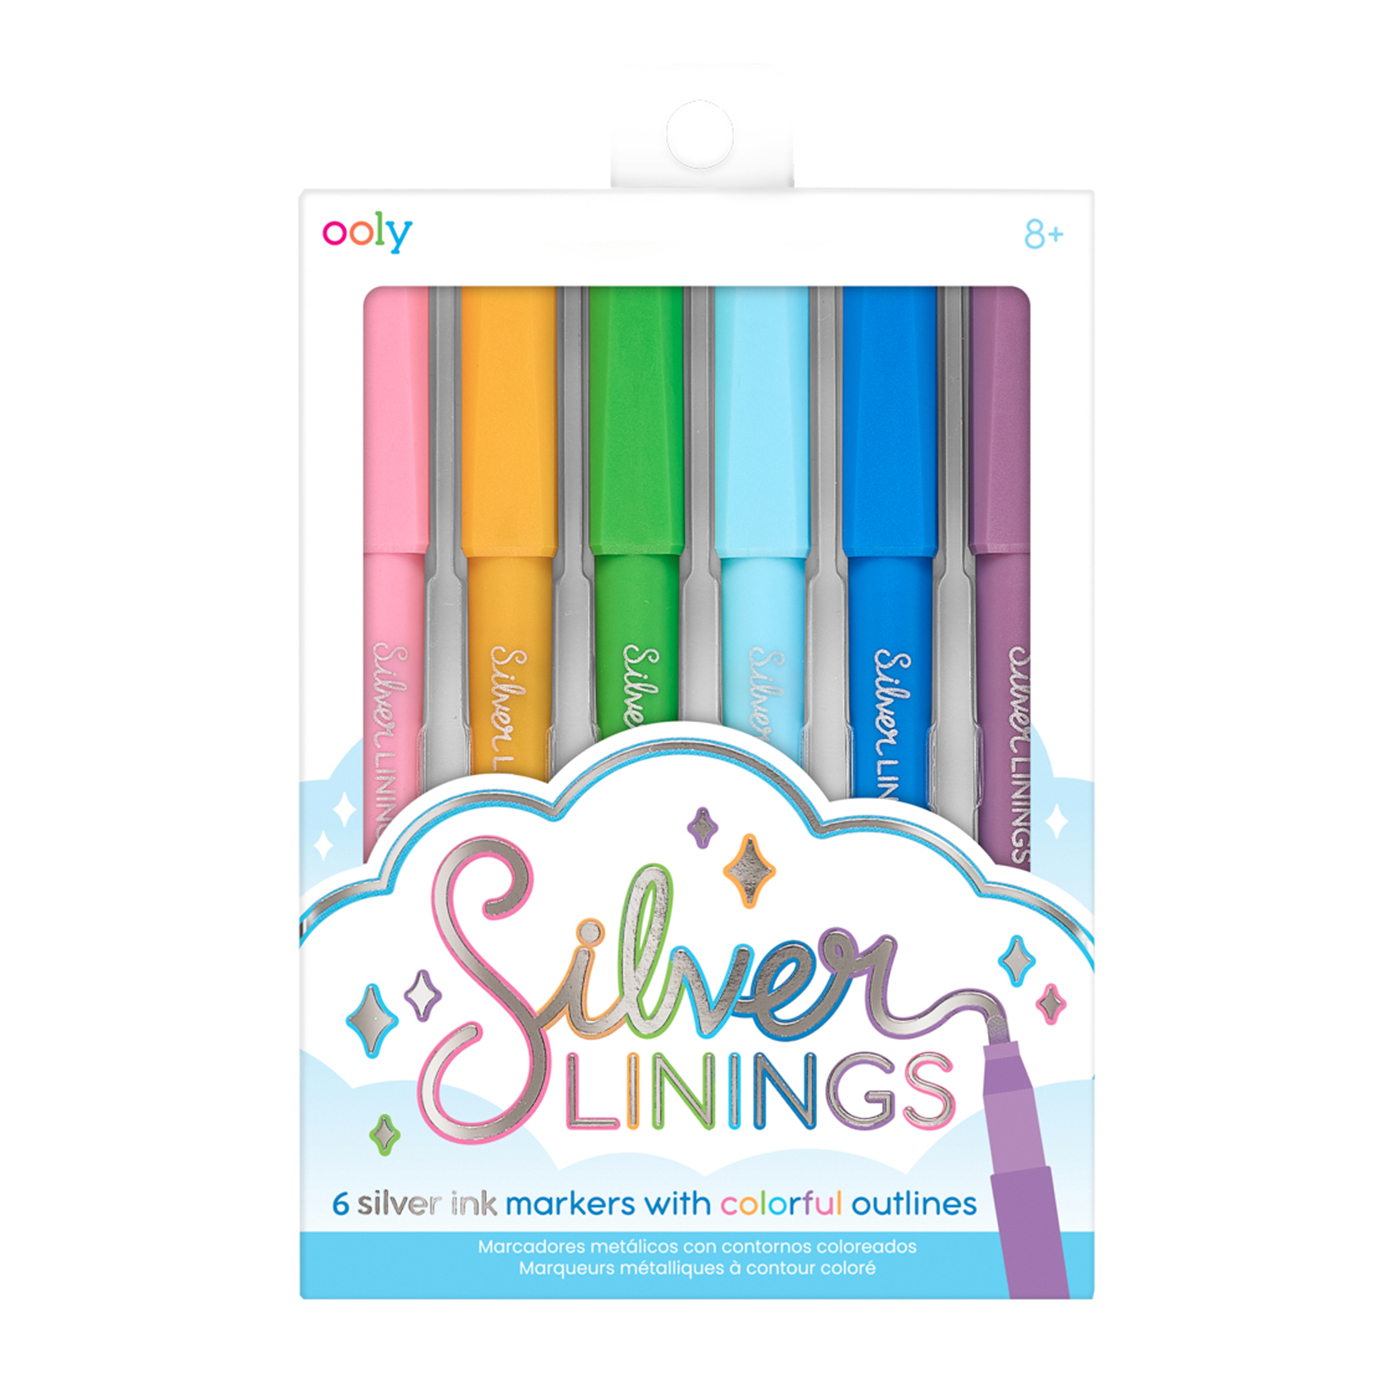  Ooly Silver Linings Renkli Gümüş Mürekkepli 6’lı Keçeli Kalem